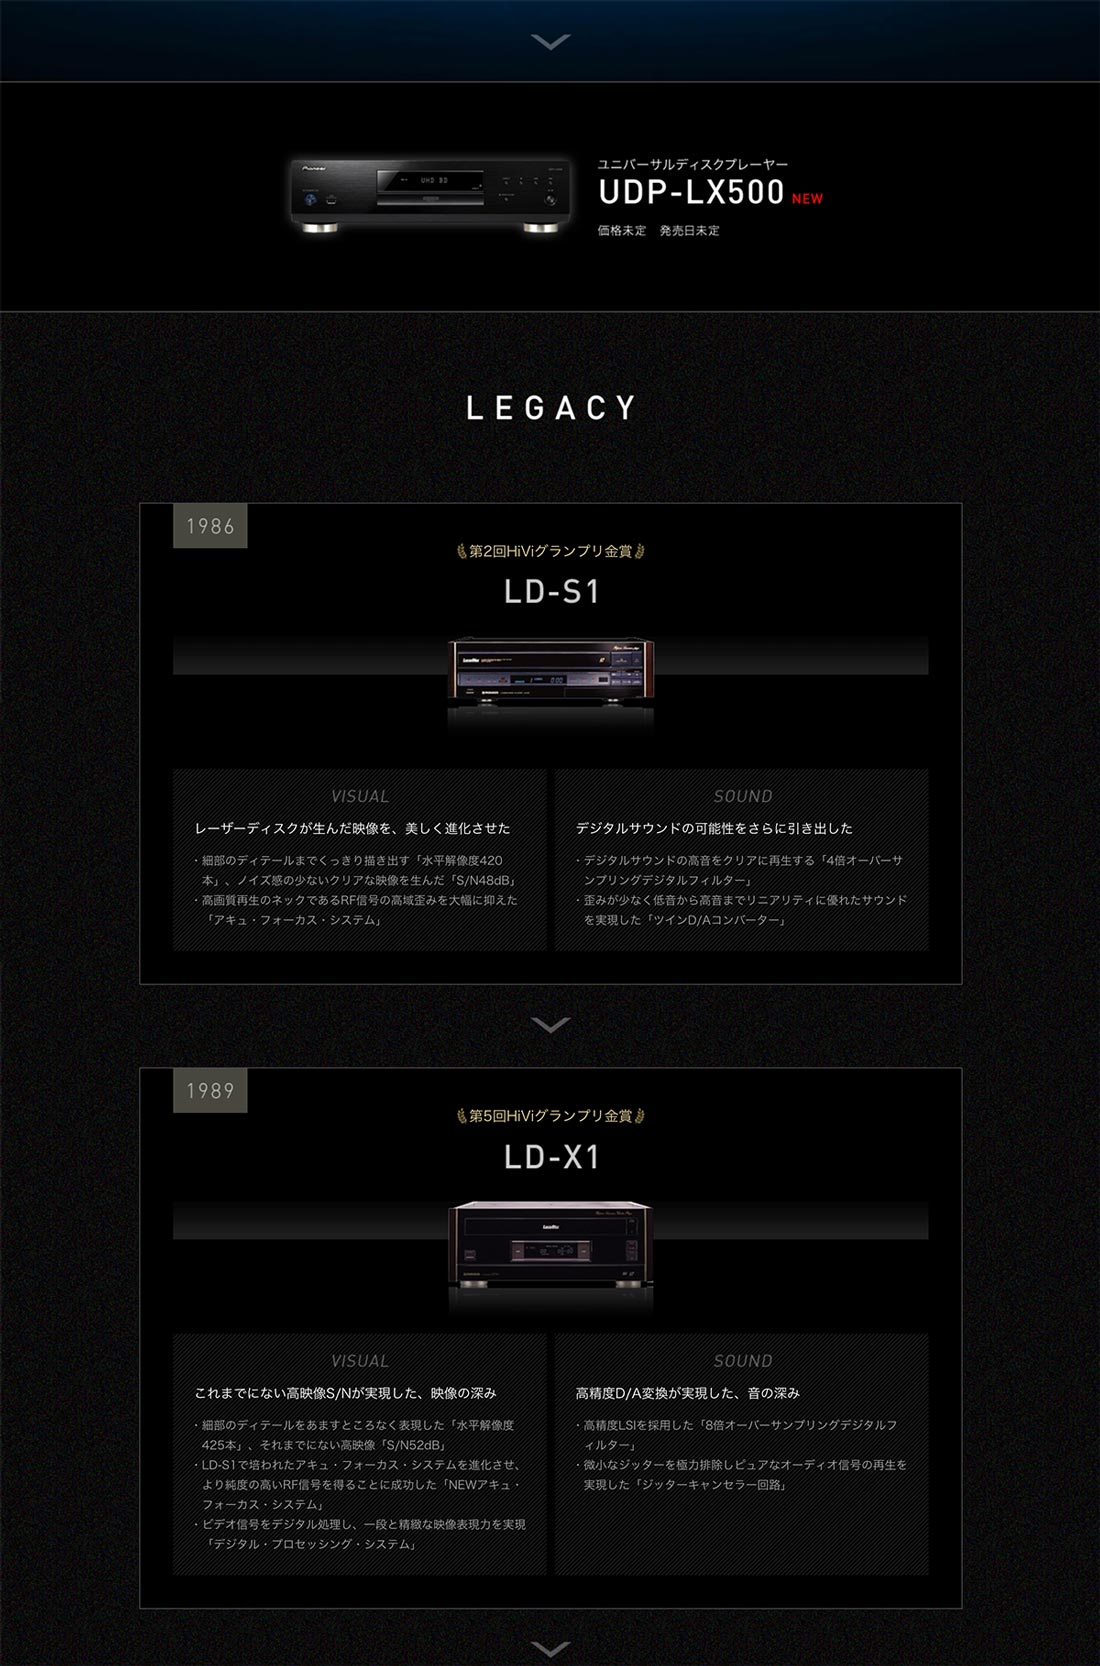 OPPO 早前公佈停止研發影音產品，一系列 UHD Blu-ray 機在市面上買少見少。正當大家擔心少了選擇的時候，Pioneer 剛剛就公佈了會在 6 月 16、17 日在日本東京舉辦的「OTOTEN AUDIO · VISUAL FESTIVAL 2018」影音展上展出最新的 UDP-LX500 播放機，也是 Pioneer 首部 UHD Blu-ray 宇宙盤。